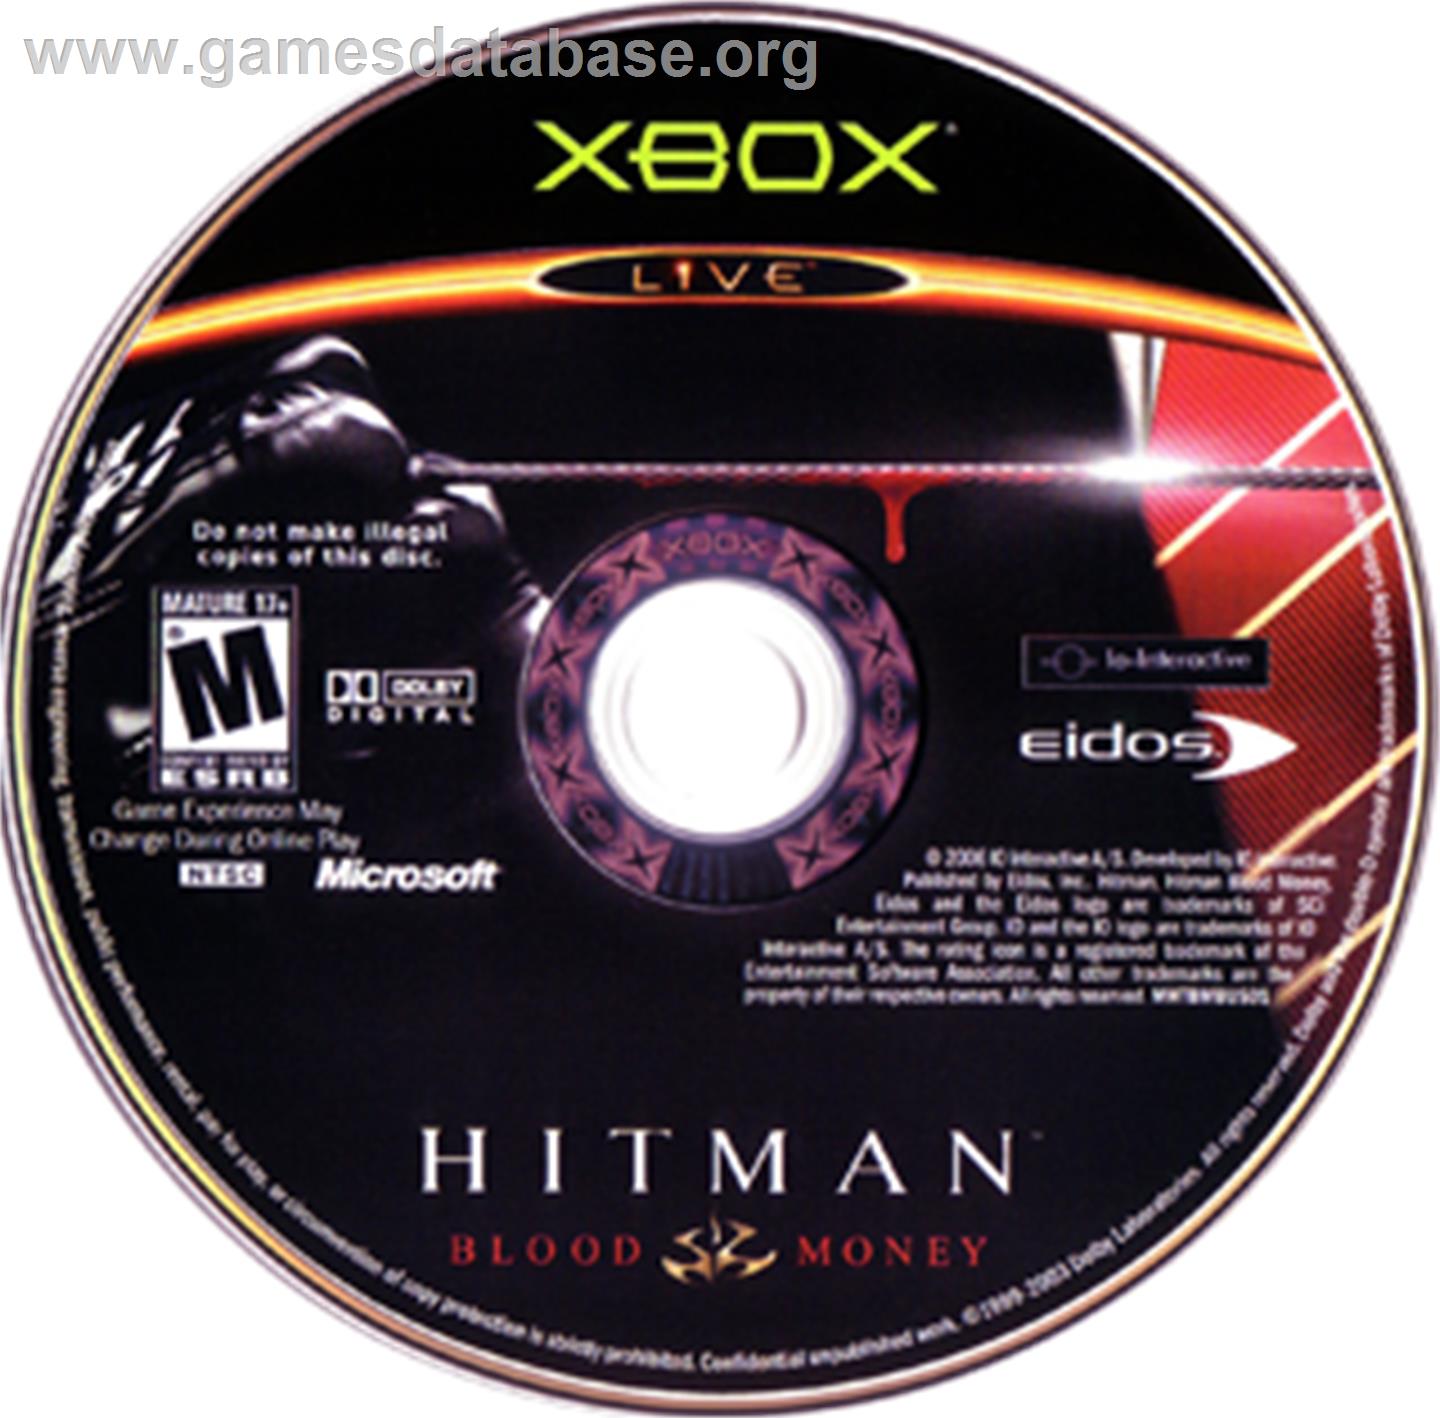 Hitman: Blood Money - Microsoft Xbox - Artwork - CD